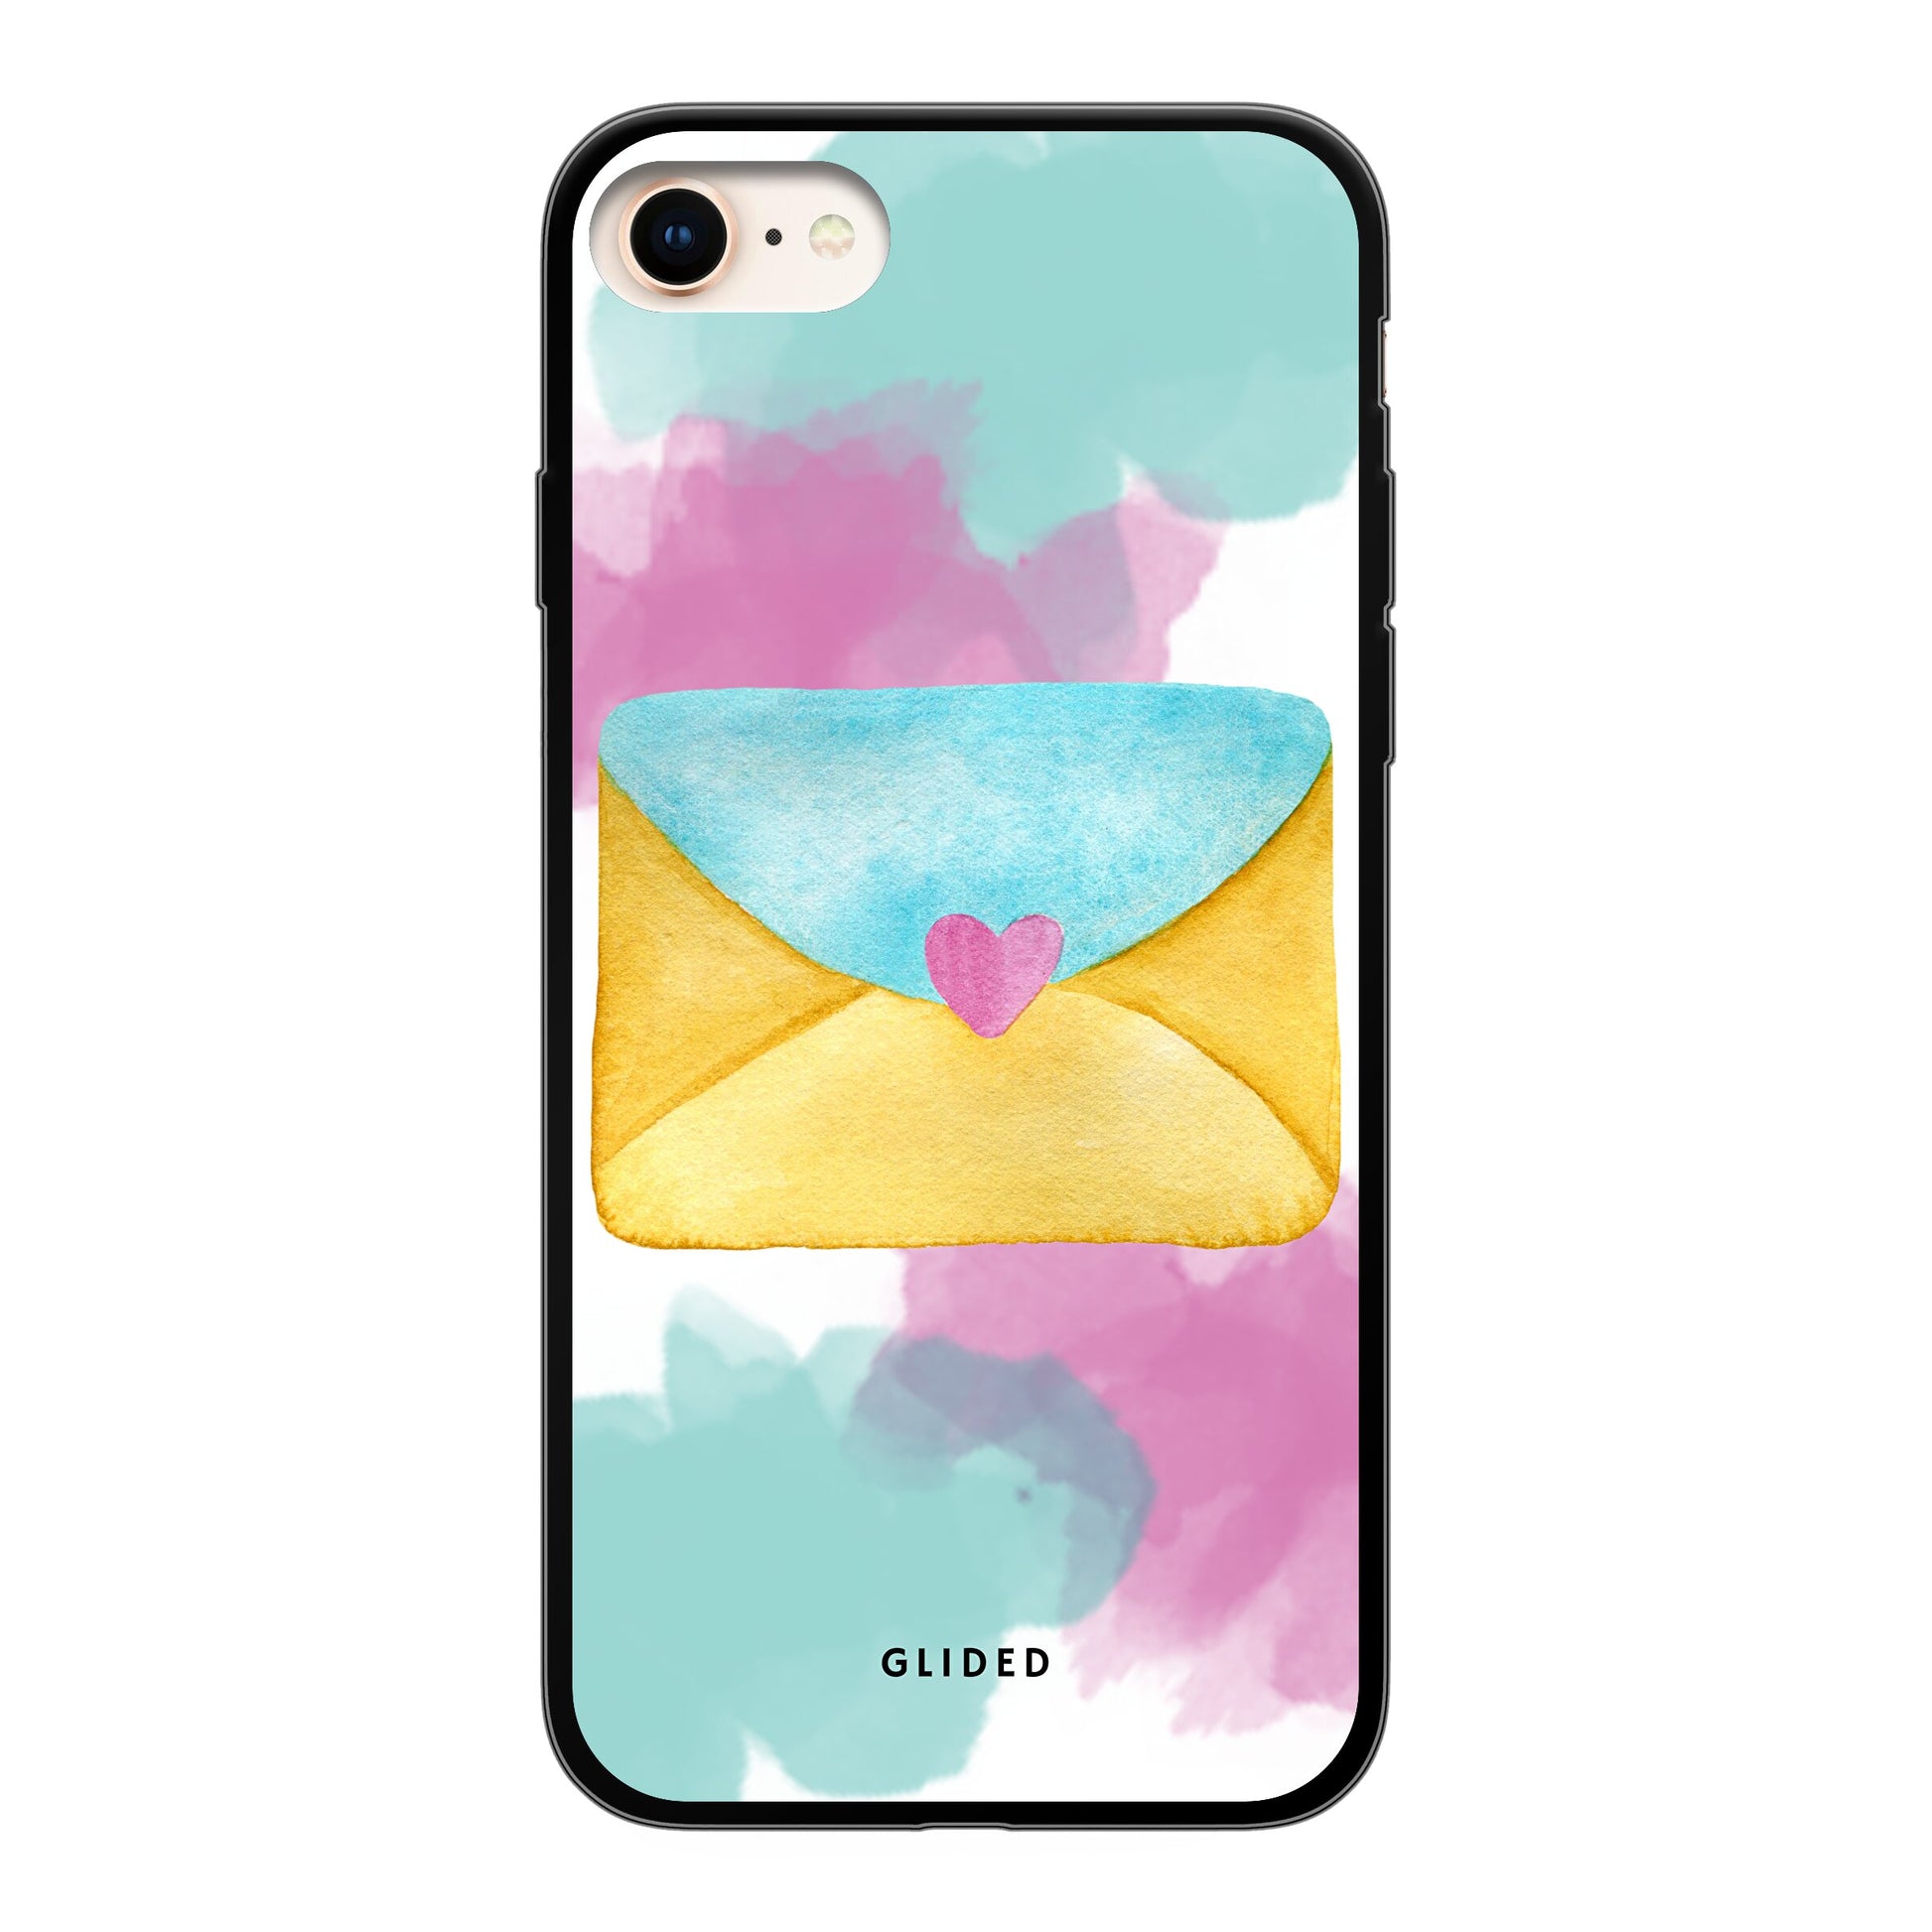 Envelope - iPhone 8 - Soft case